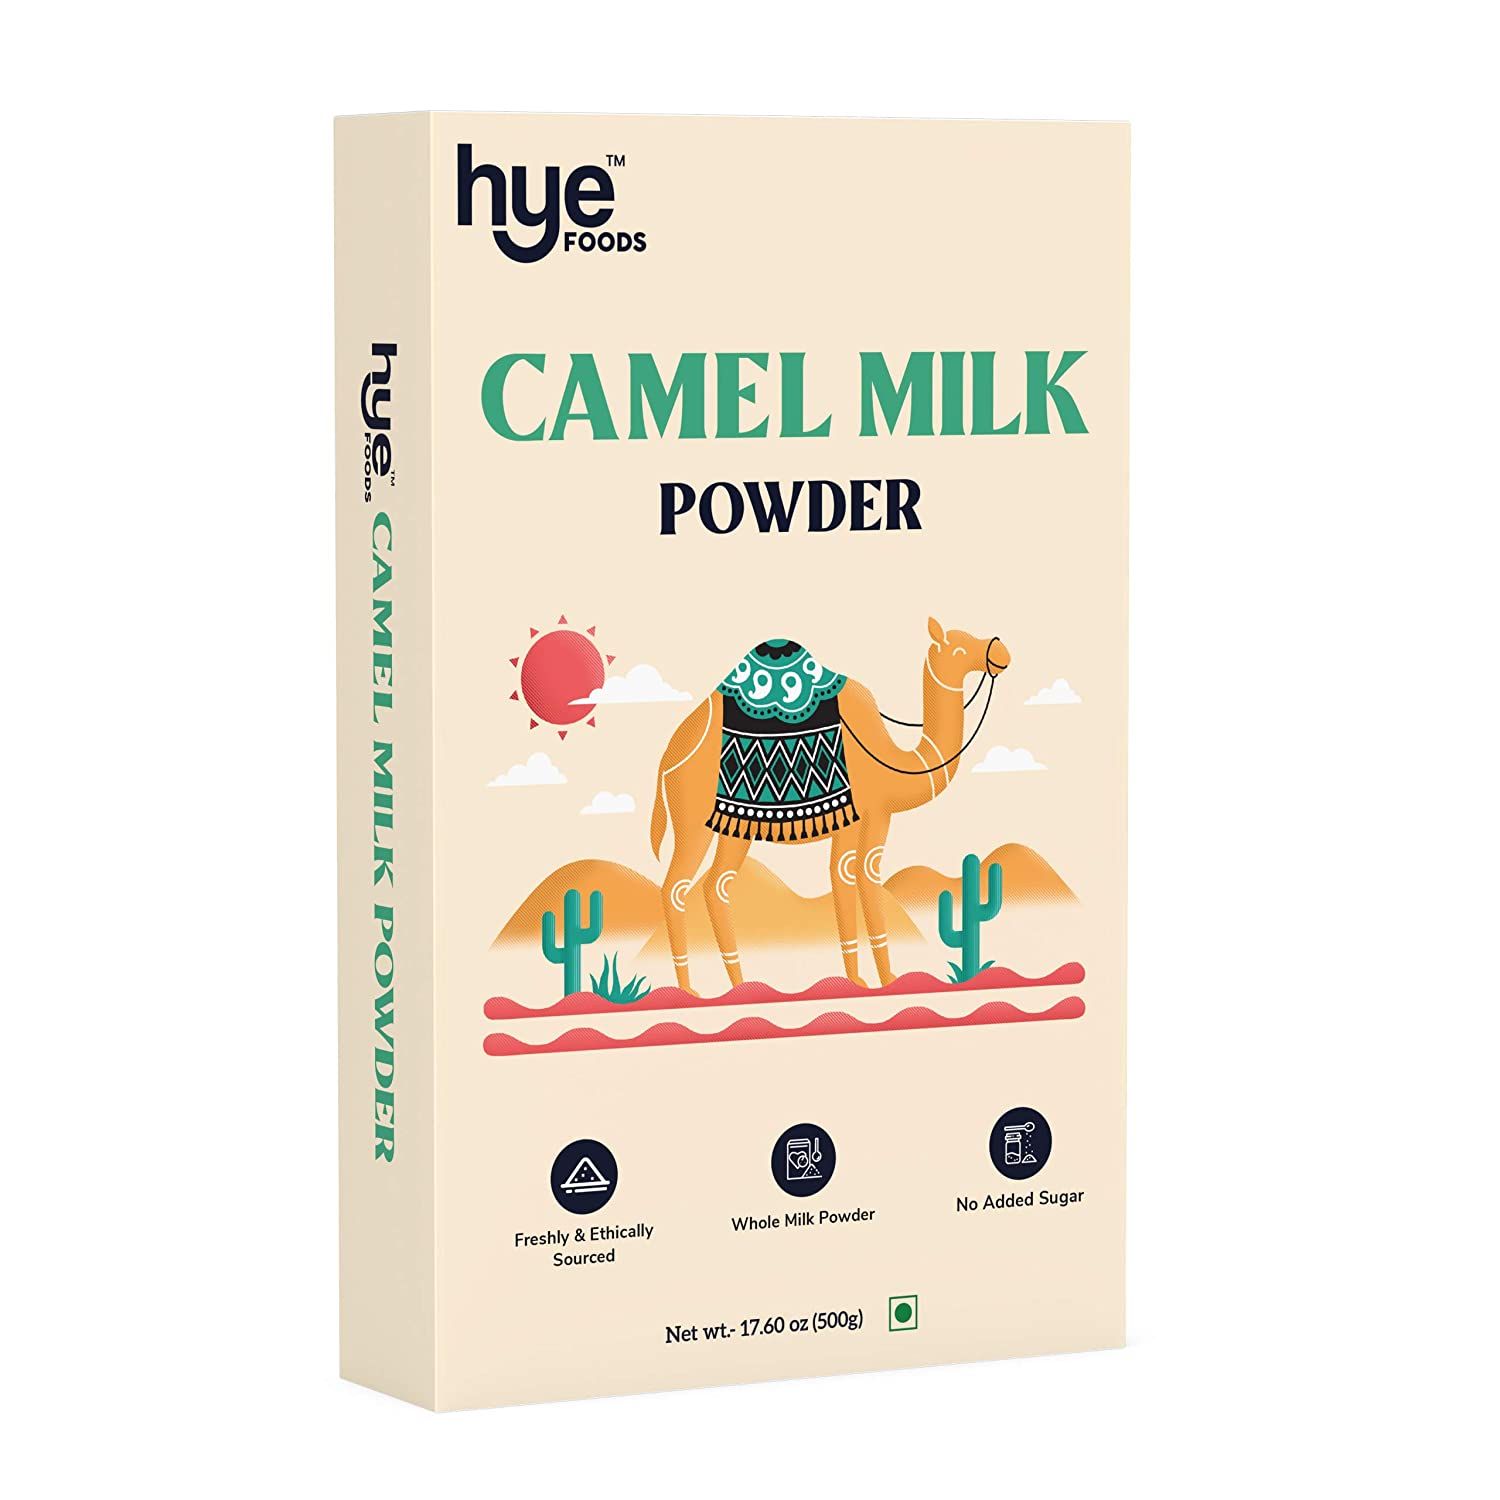 Hey Foods Camel Milk Powder Image